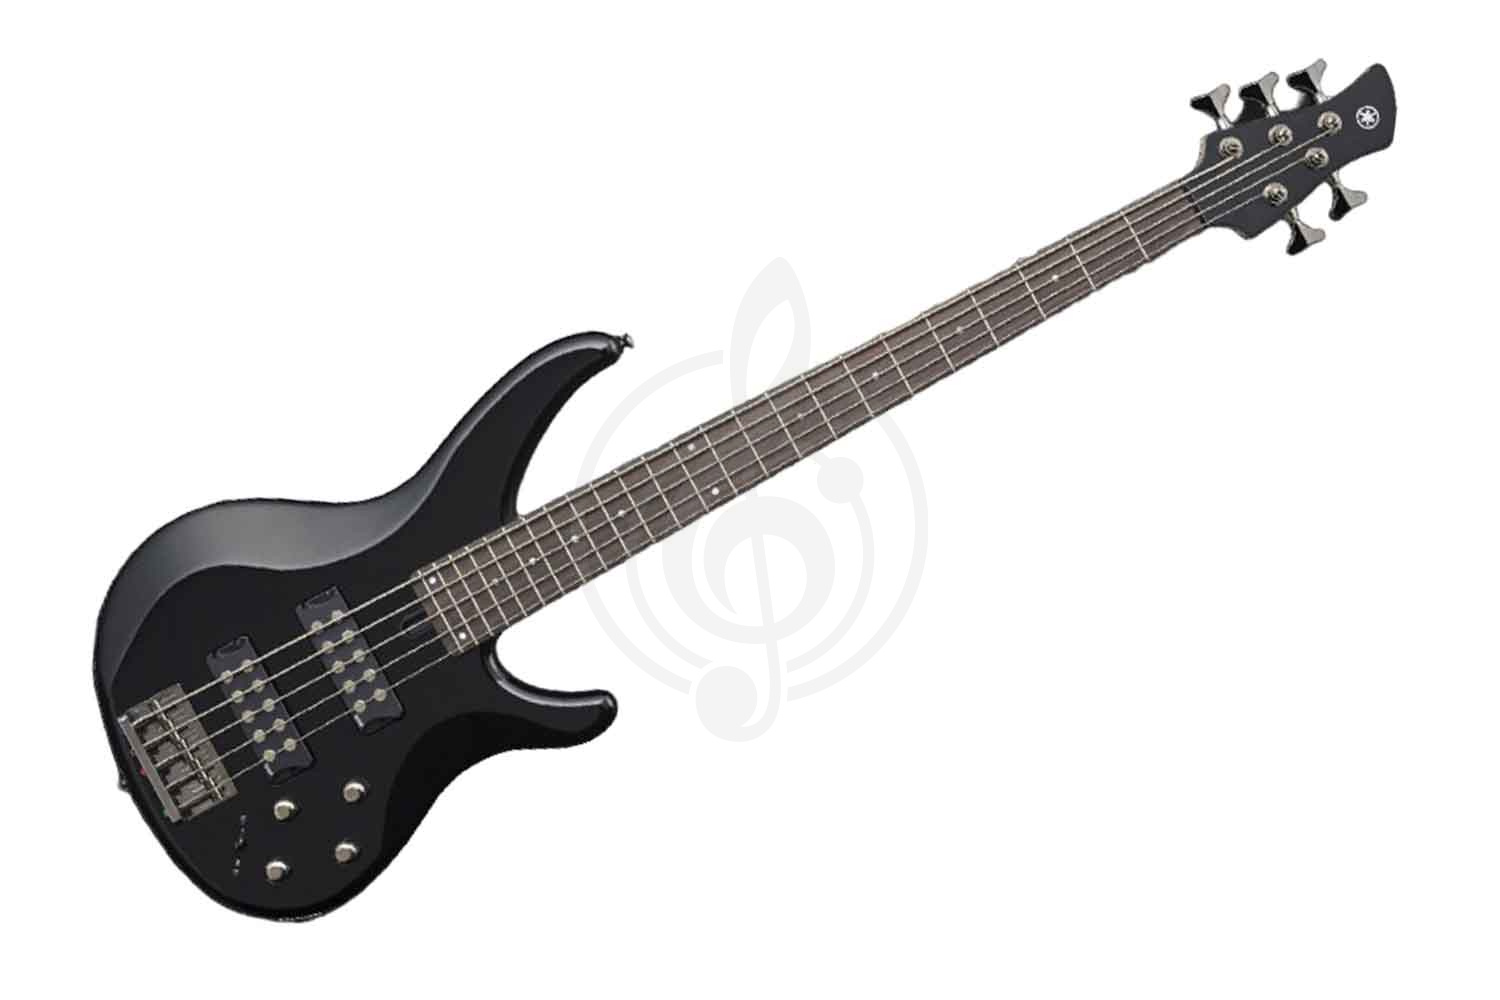 Бас-гитара Бас-гитары Yamaha Yamaha RBX375 Бас-гитара, цвет черный RBX375 - фото 1